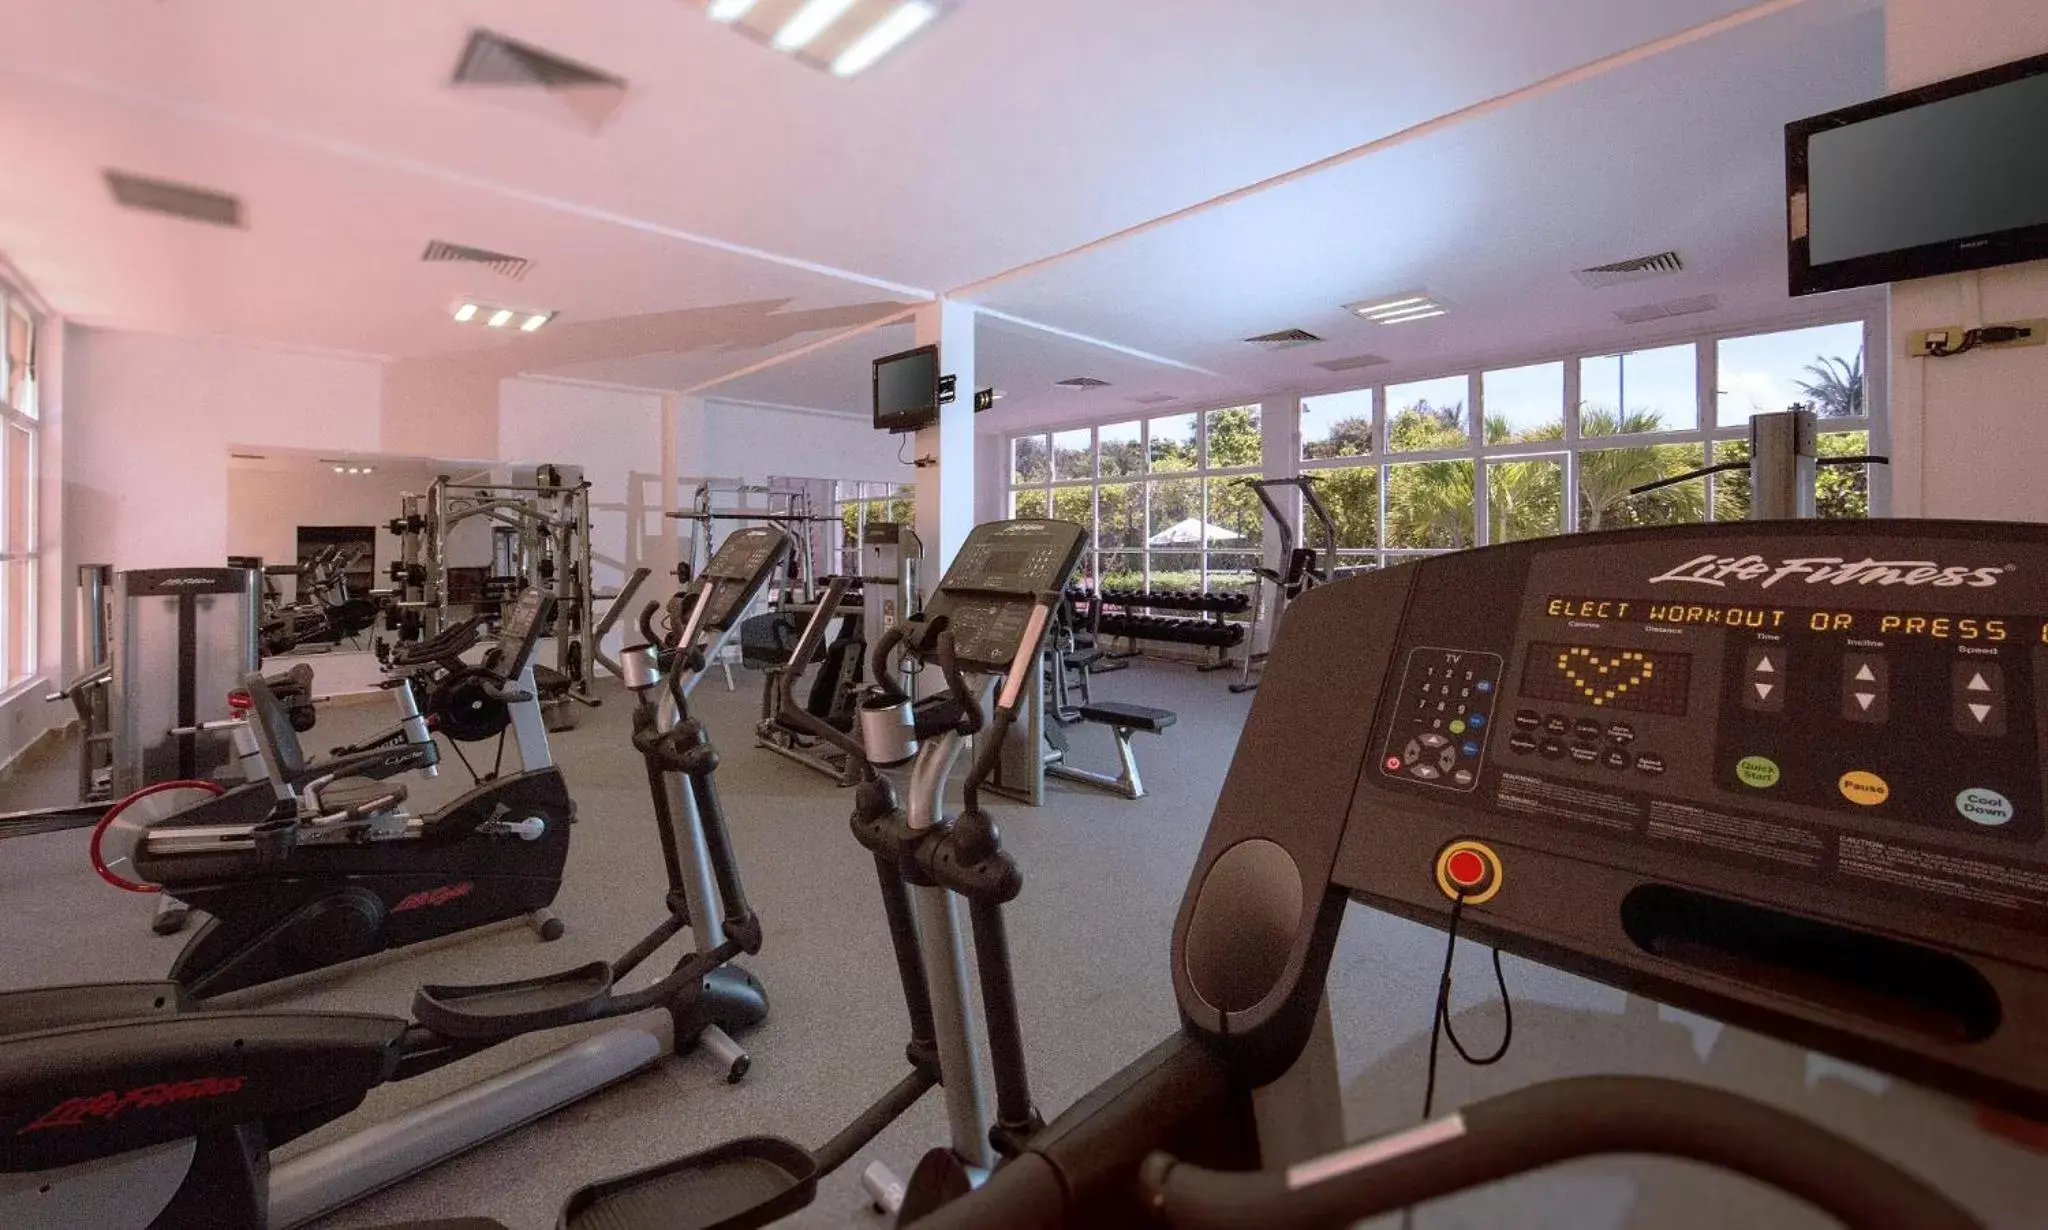 Fitness centre/facilities, Fitness Center/Facilities in Dreams Tulum Resort & Spa